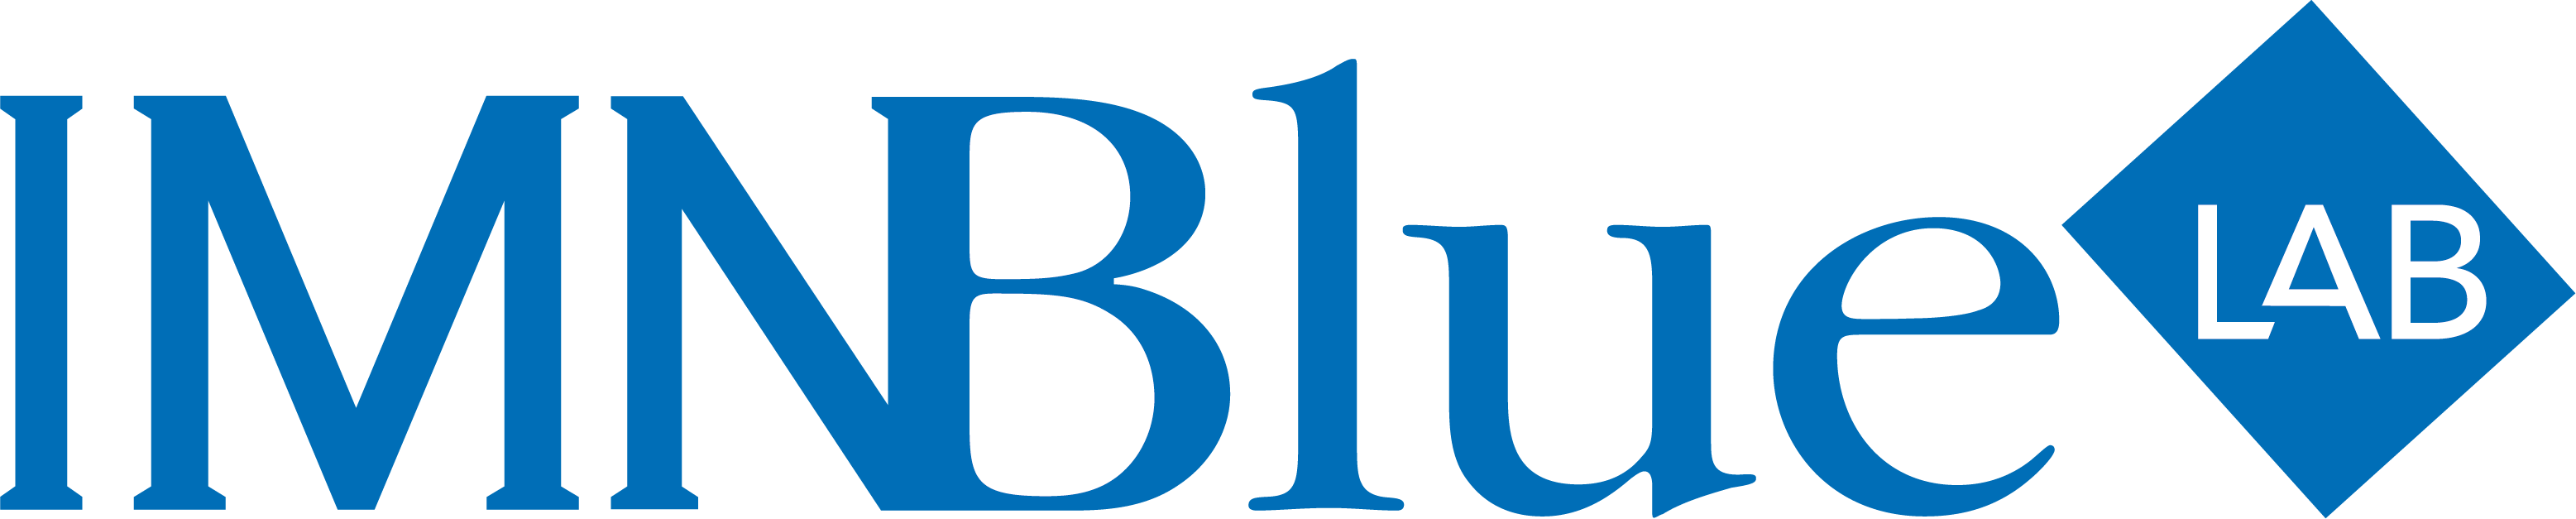 logo imnblue lab bleu